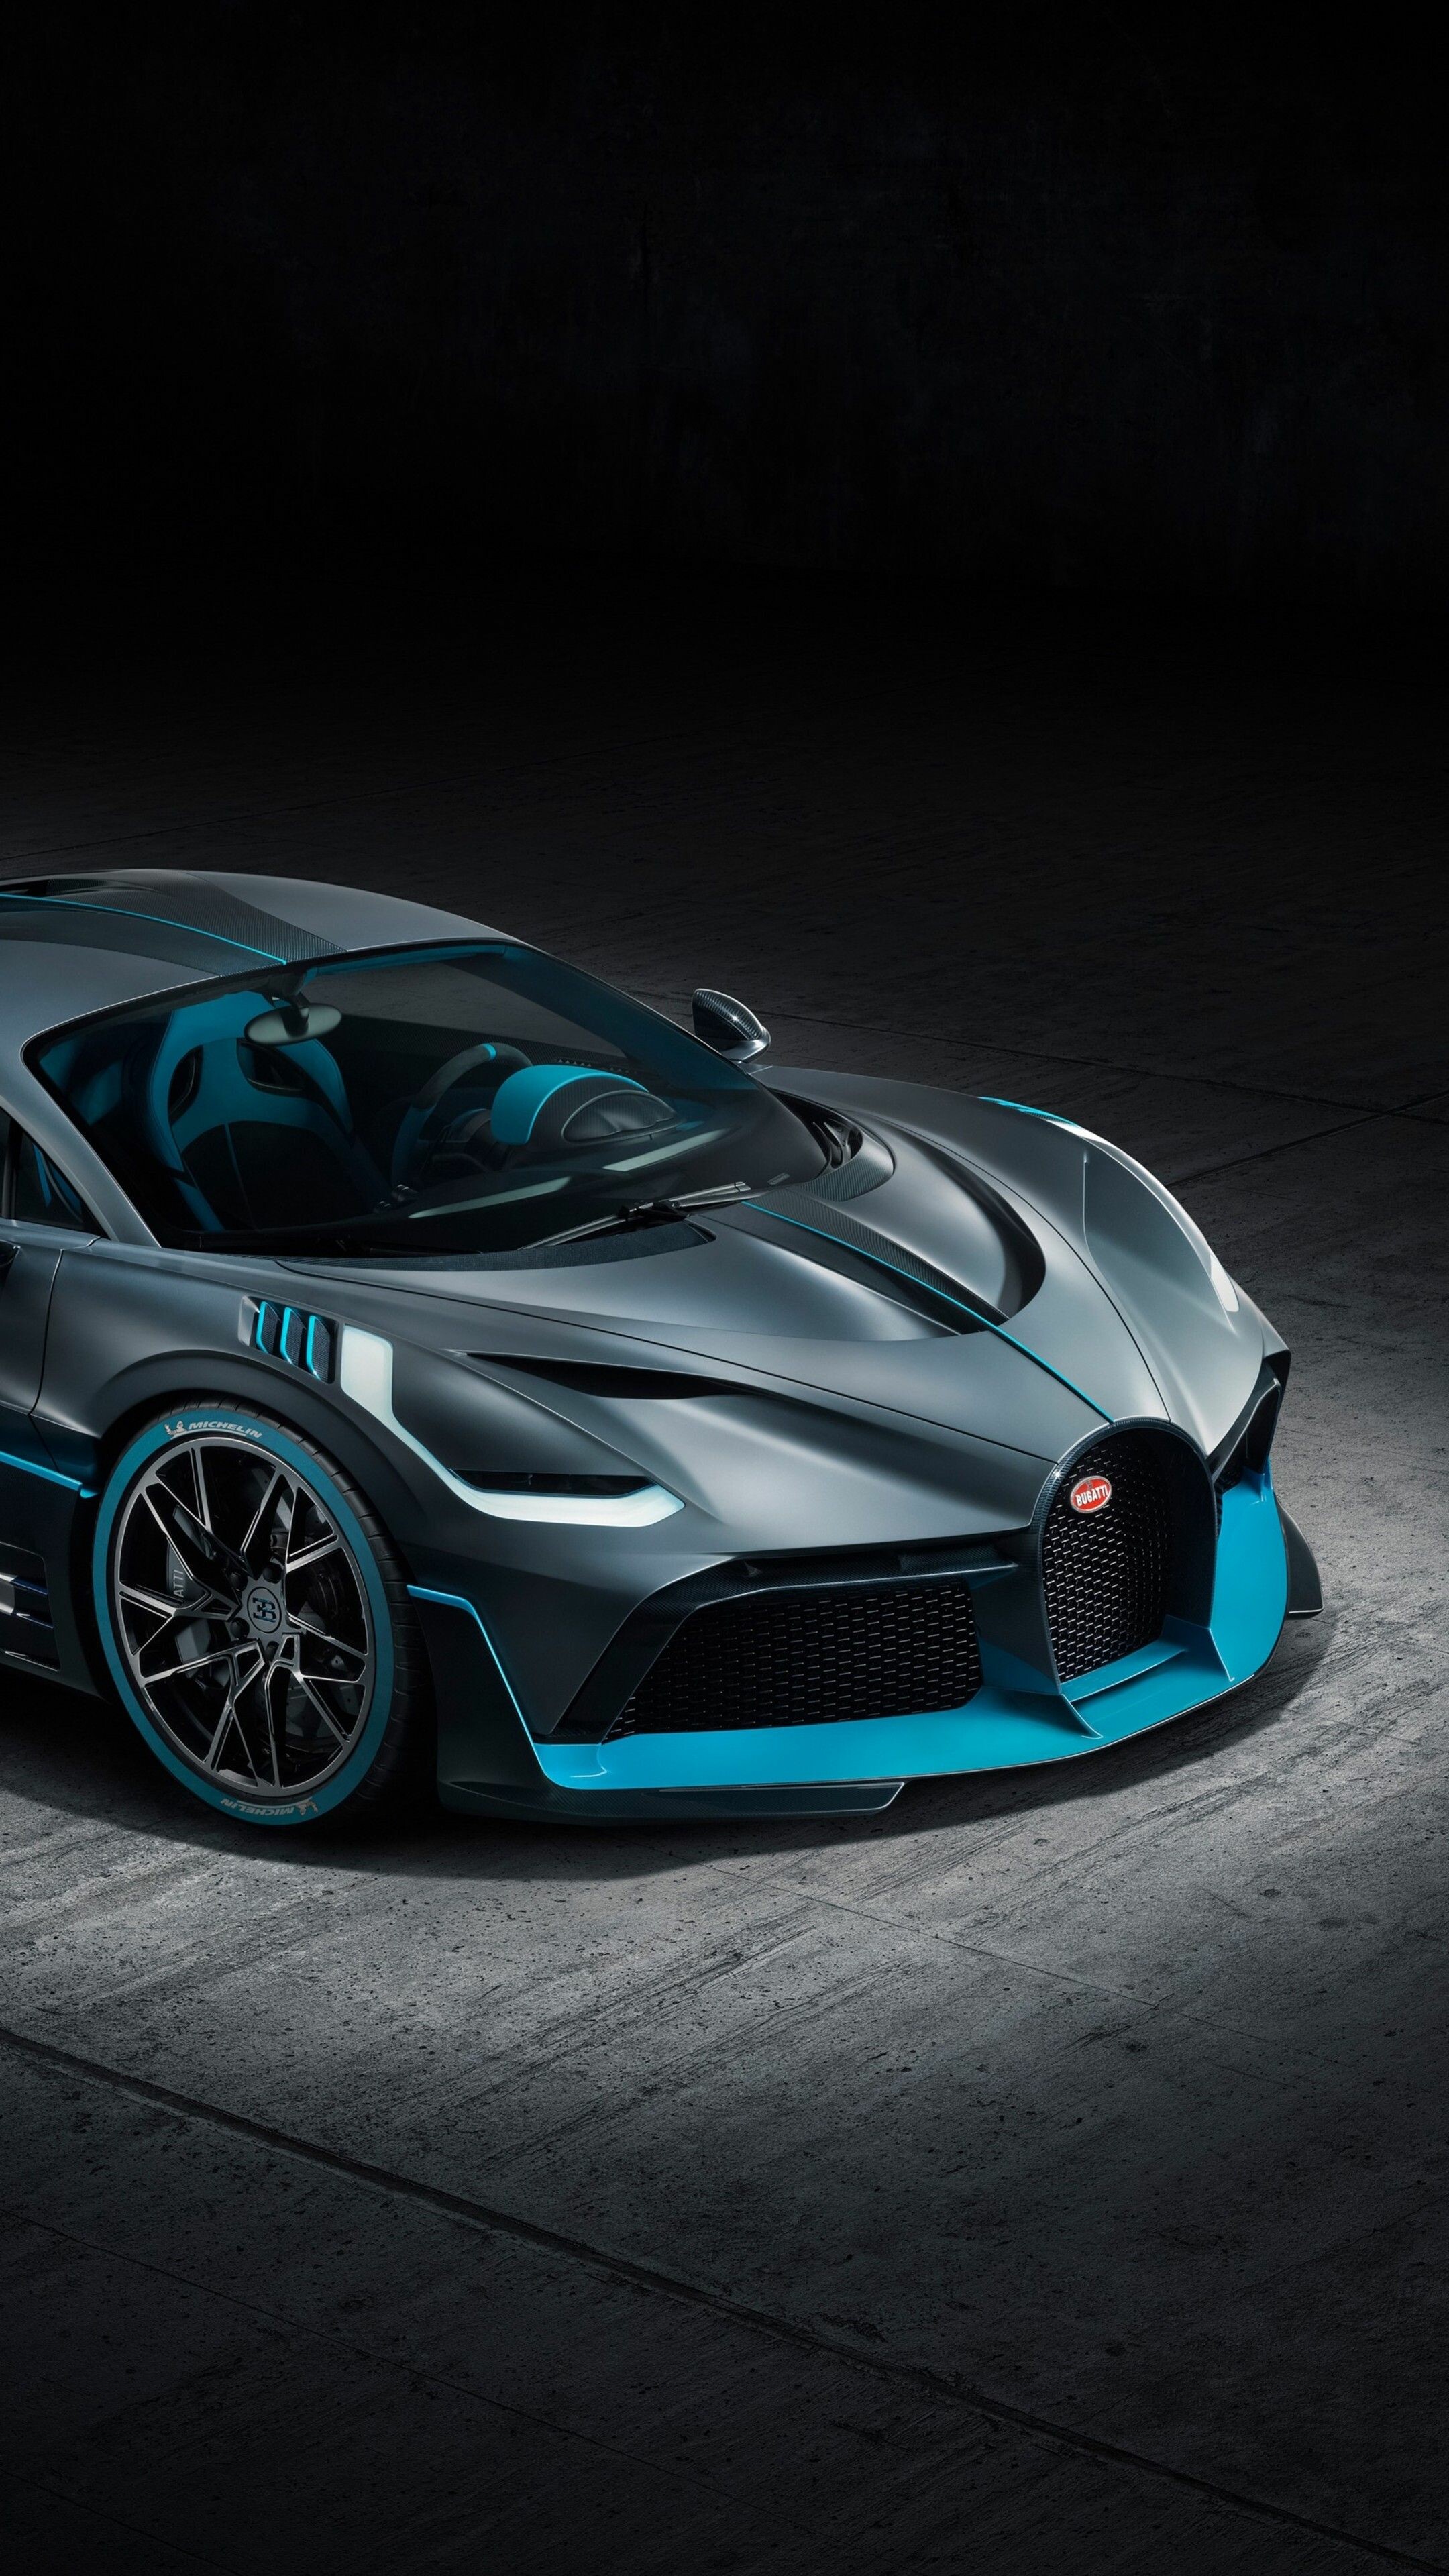 Bugatti: Cars, Model Divo 2018, Luxury cars, Supercars. 2160x3840 4K Wallpaper.